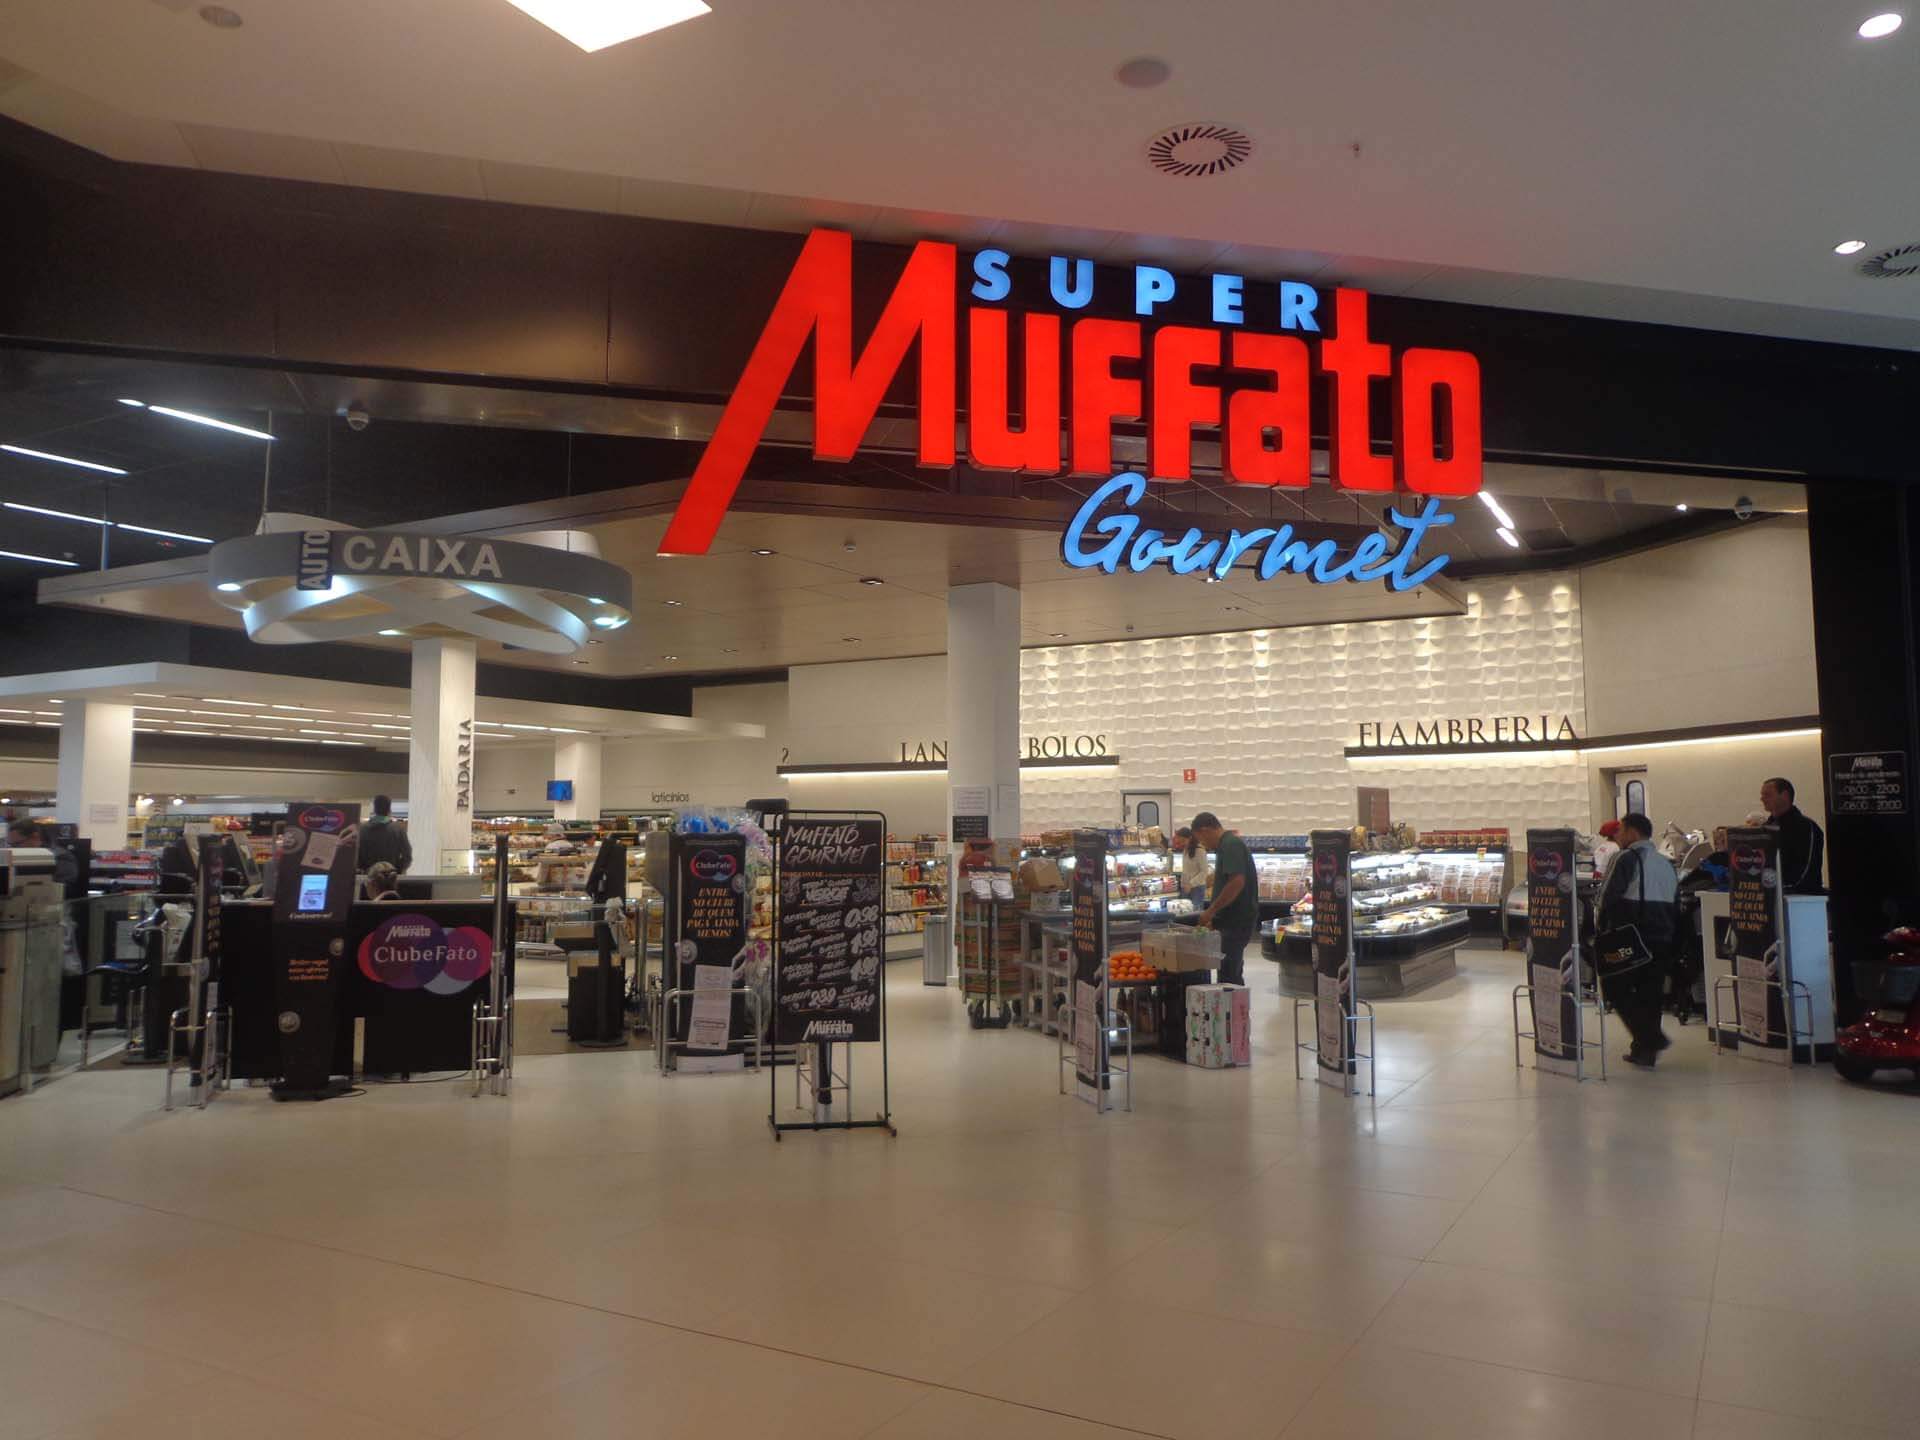 Muffato